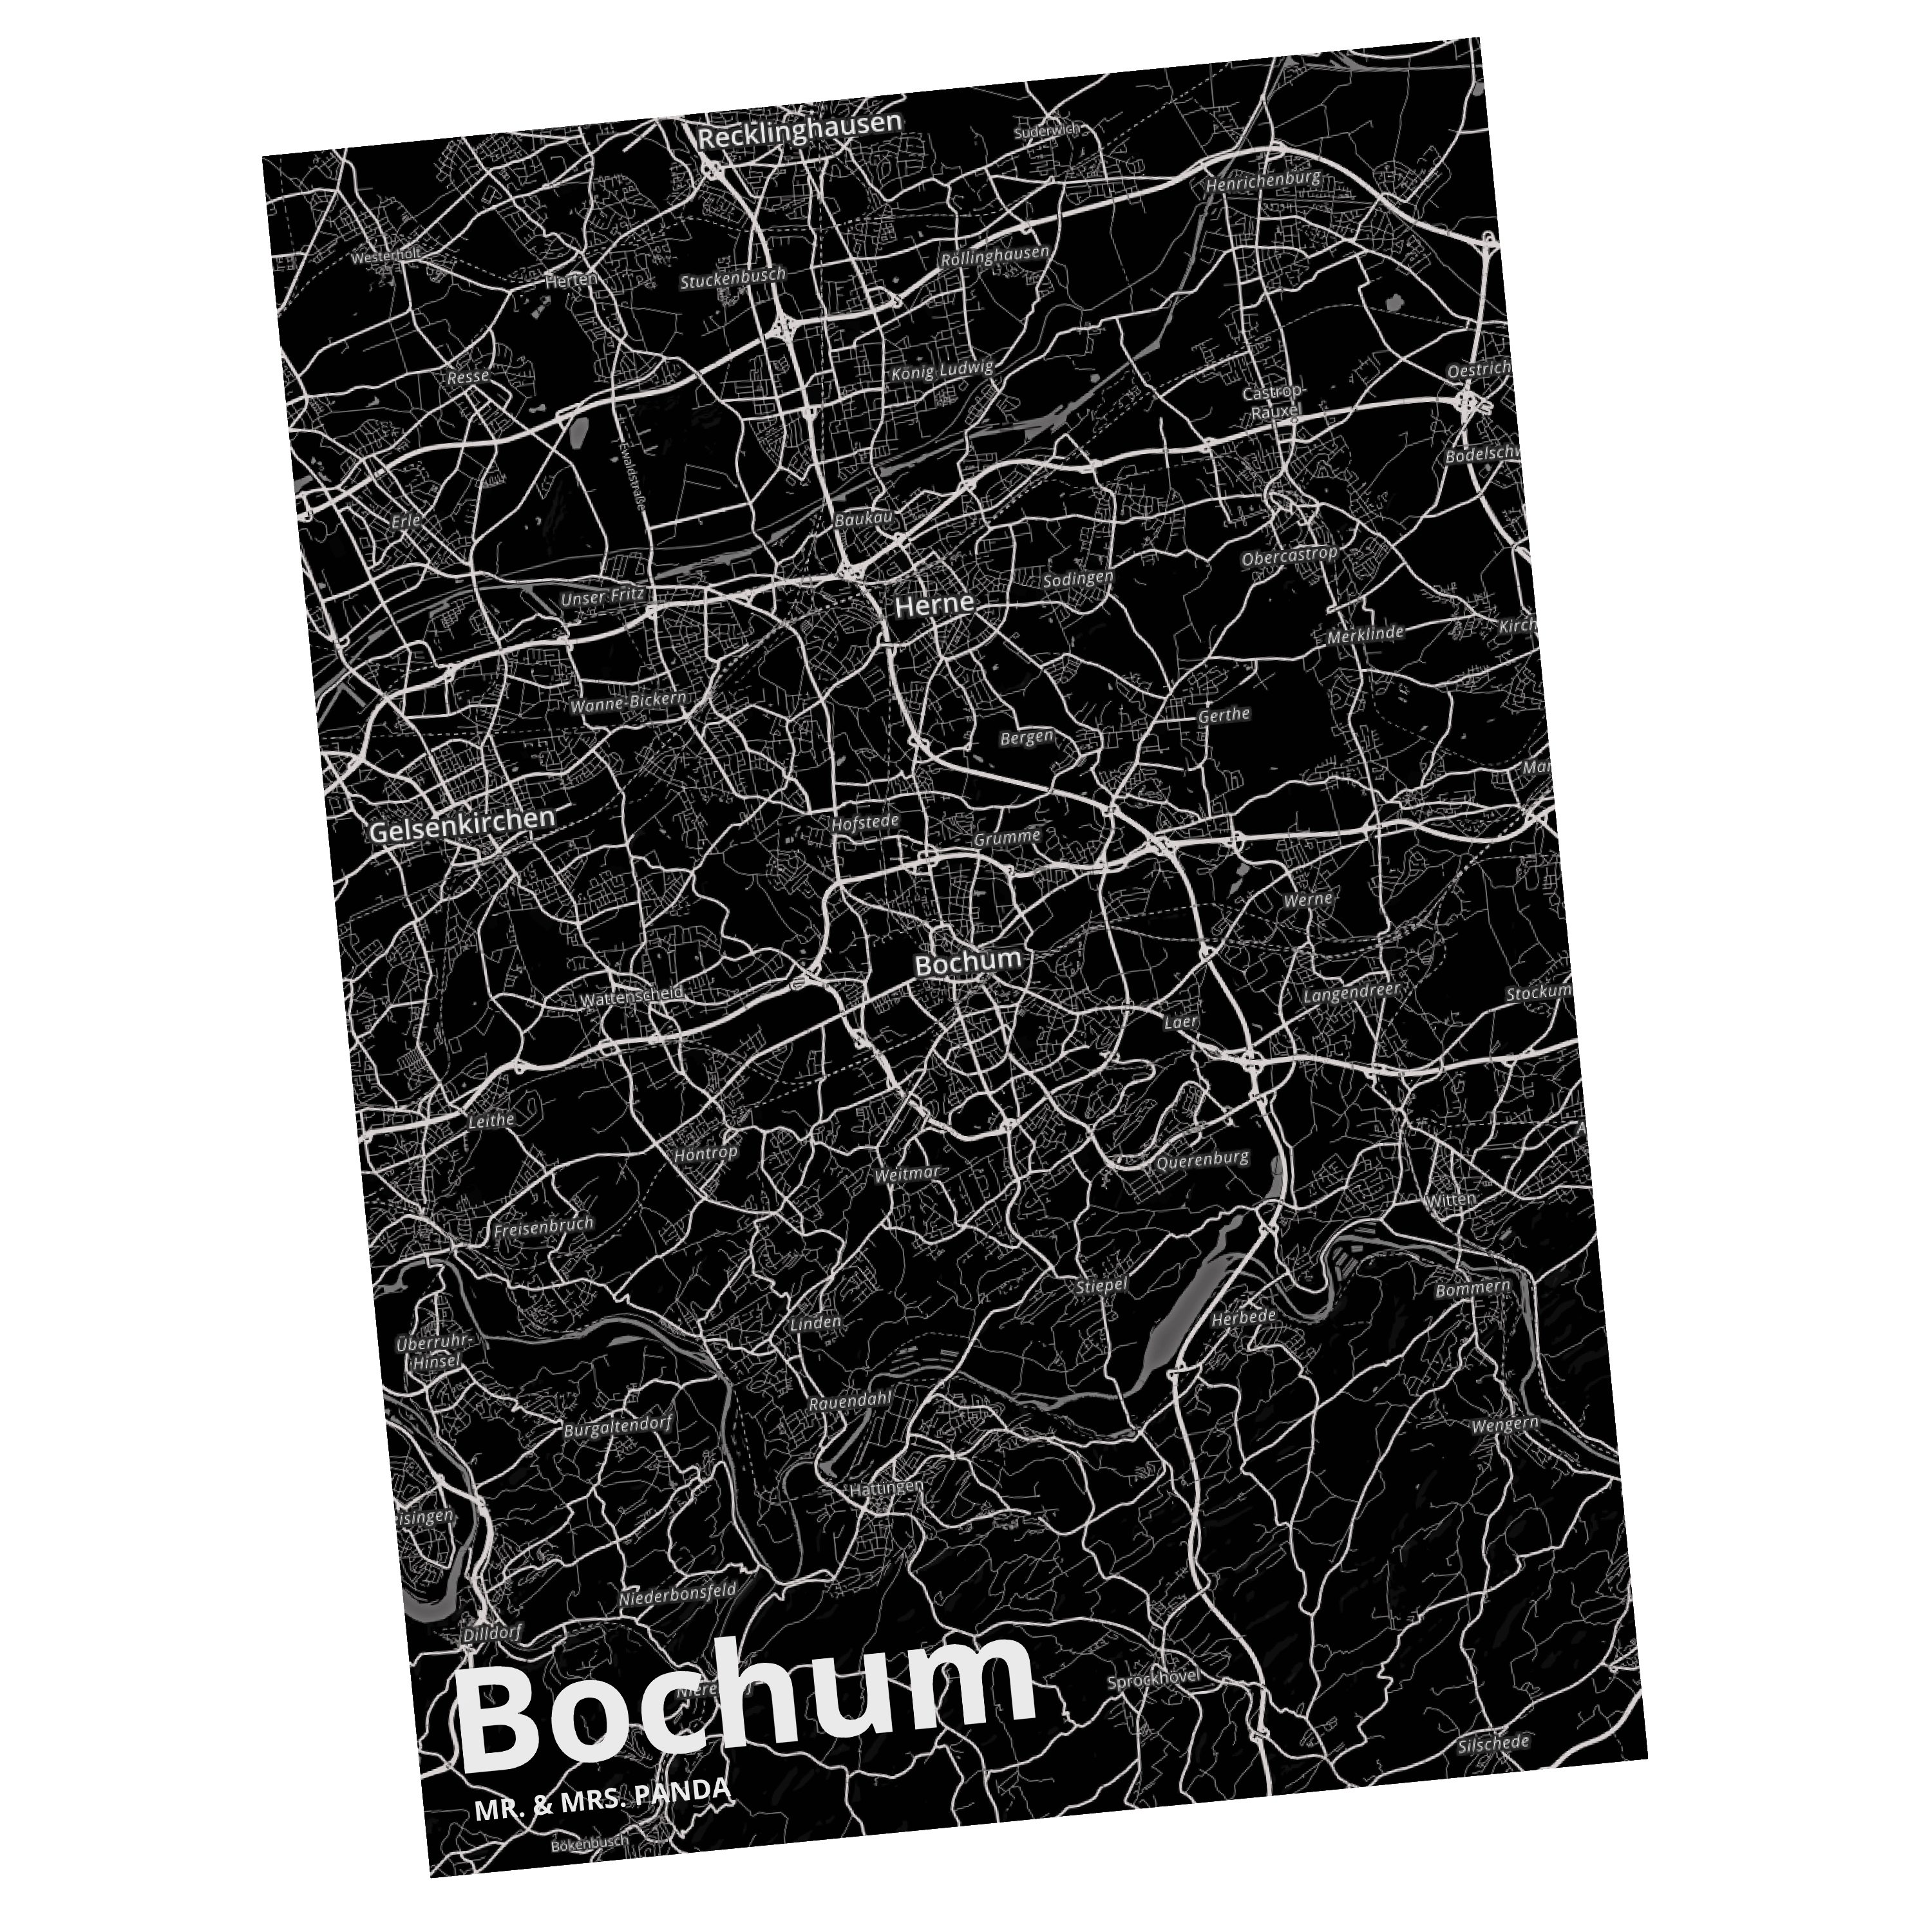 Mr. & Mrs. Panda Postkarte Bochum - Geschenk, Stadt Dorf Karte Landkarte Map Stadtplan, Ansichts